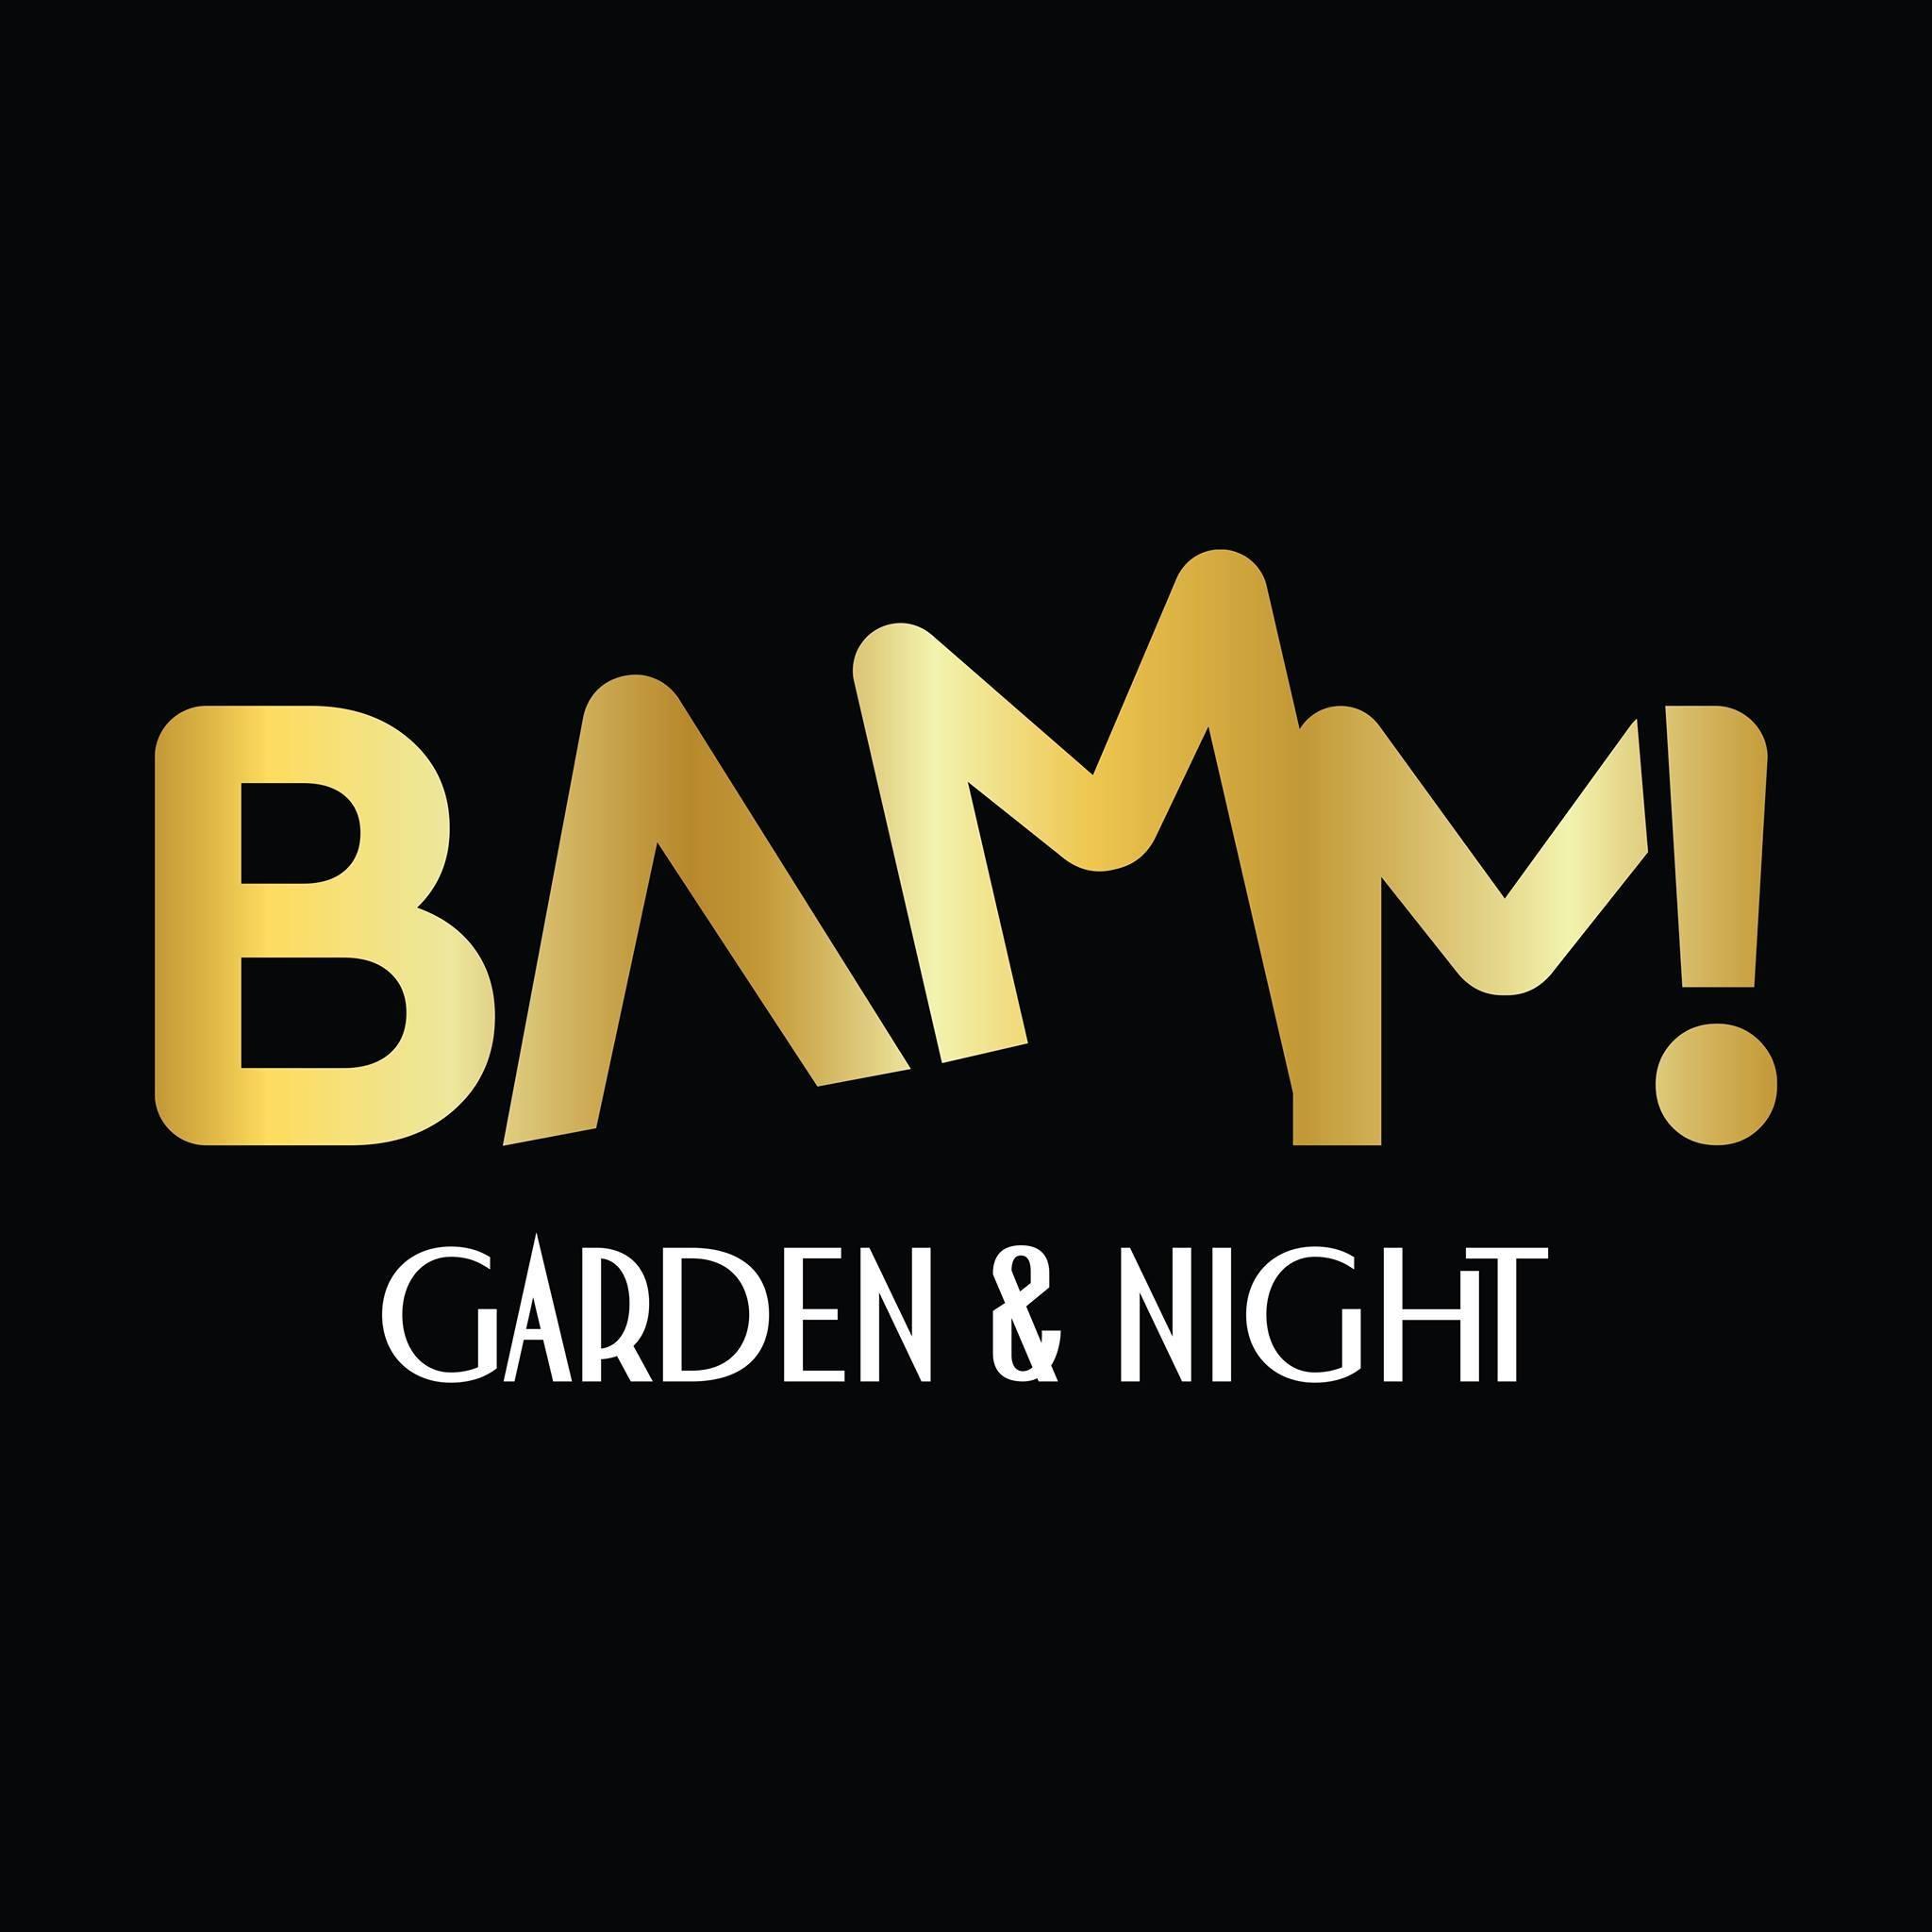 BAMM Garden & Night logo